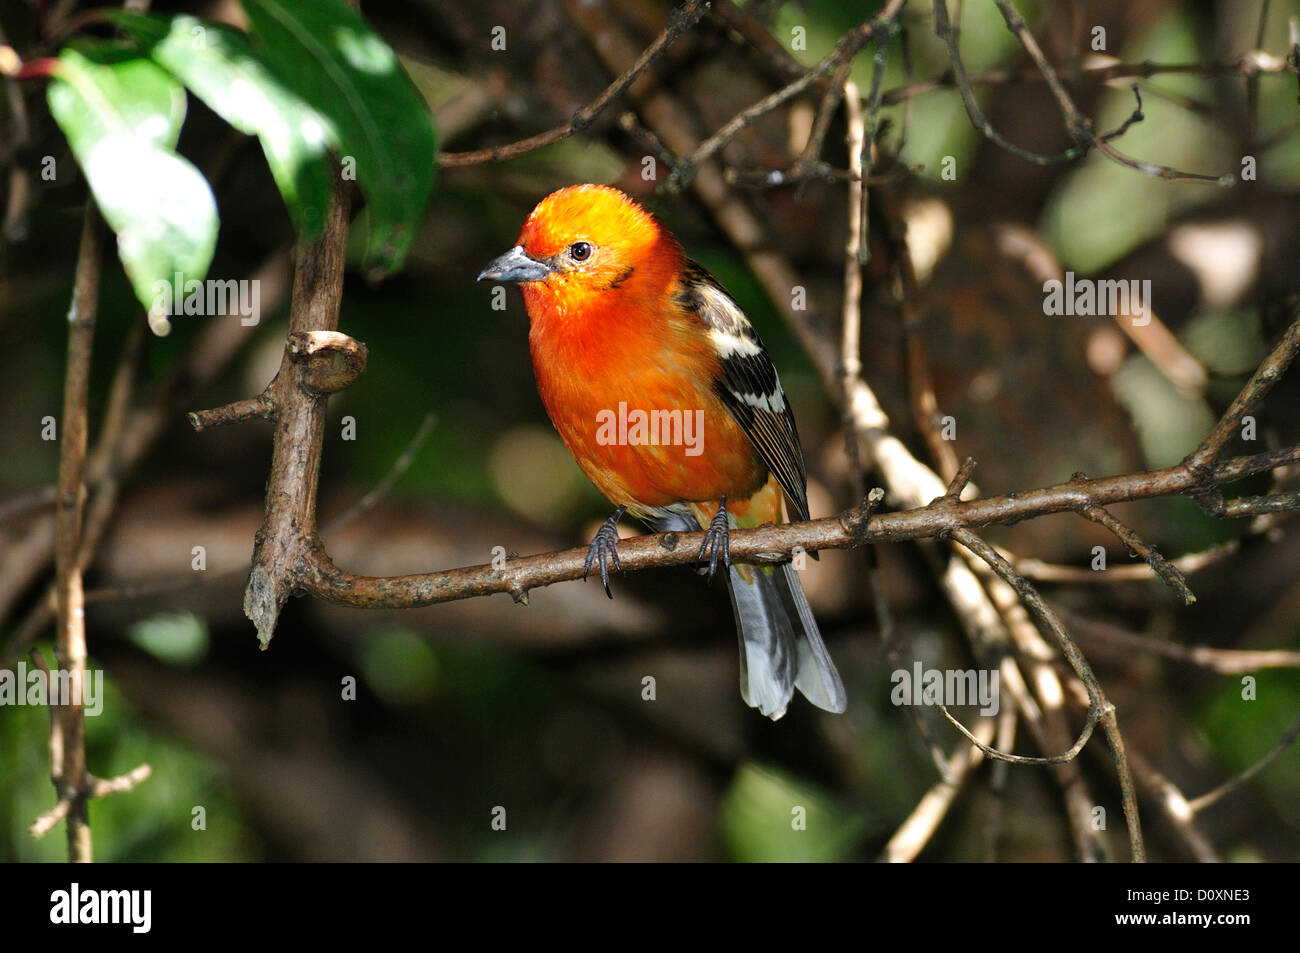 Bird, Costa Rica, Central America, orange, yellow, Stock Photo